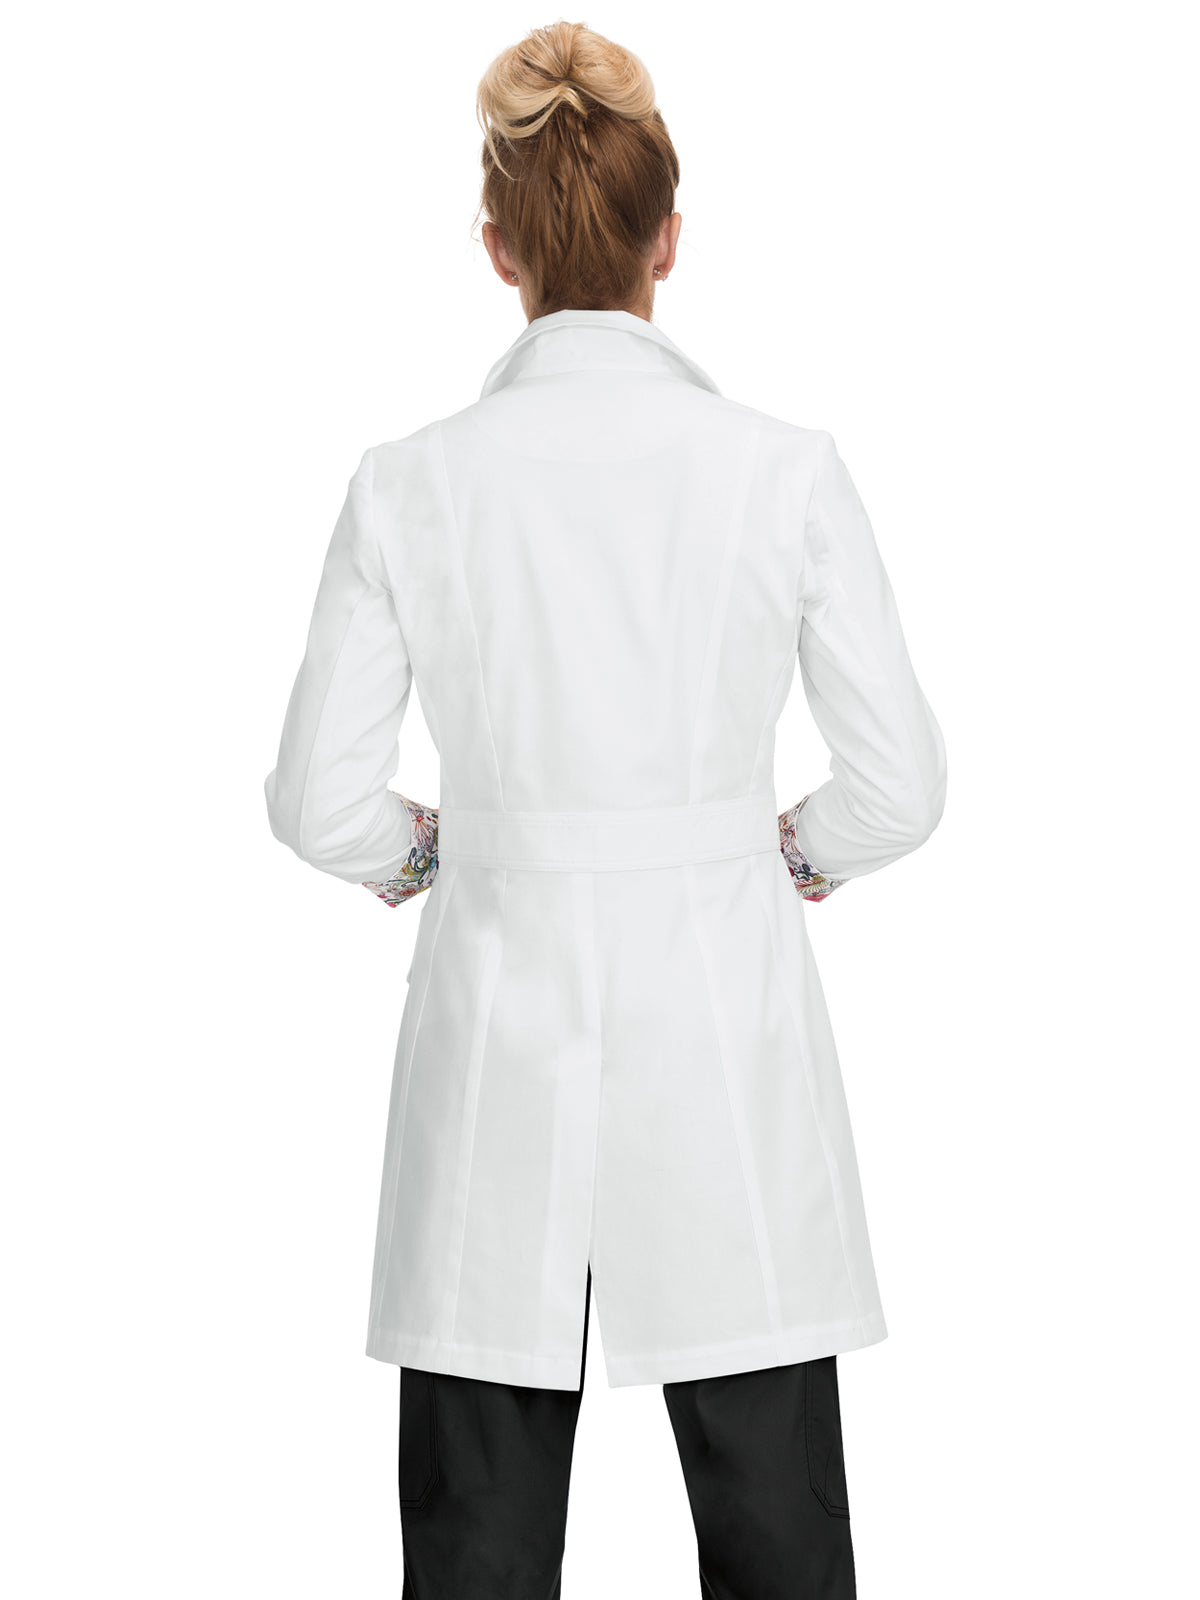 Women's Four-Pocket Geneva Lab Coat - 408 - White